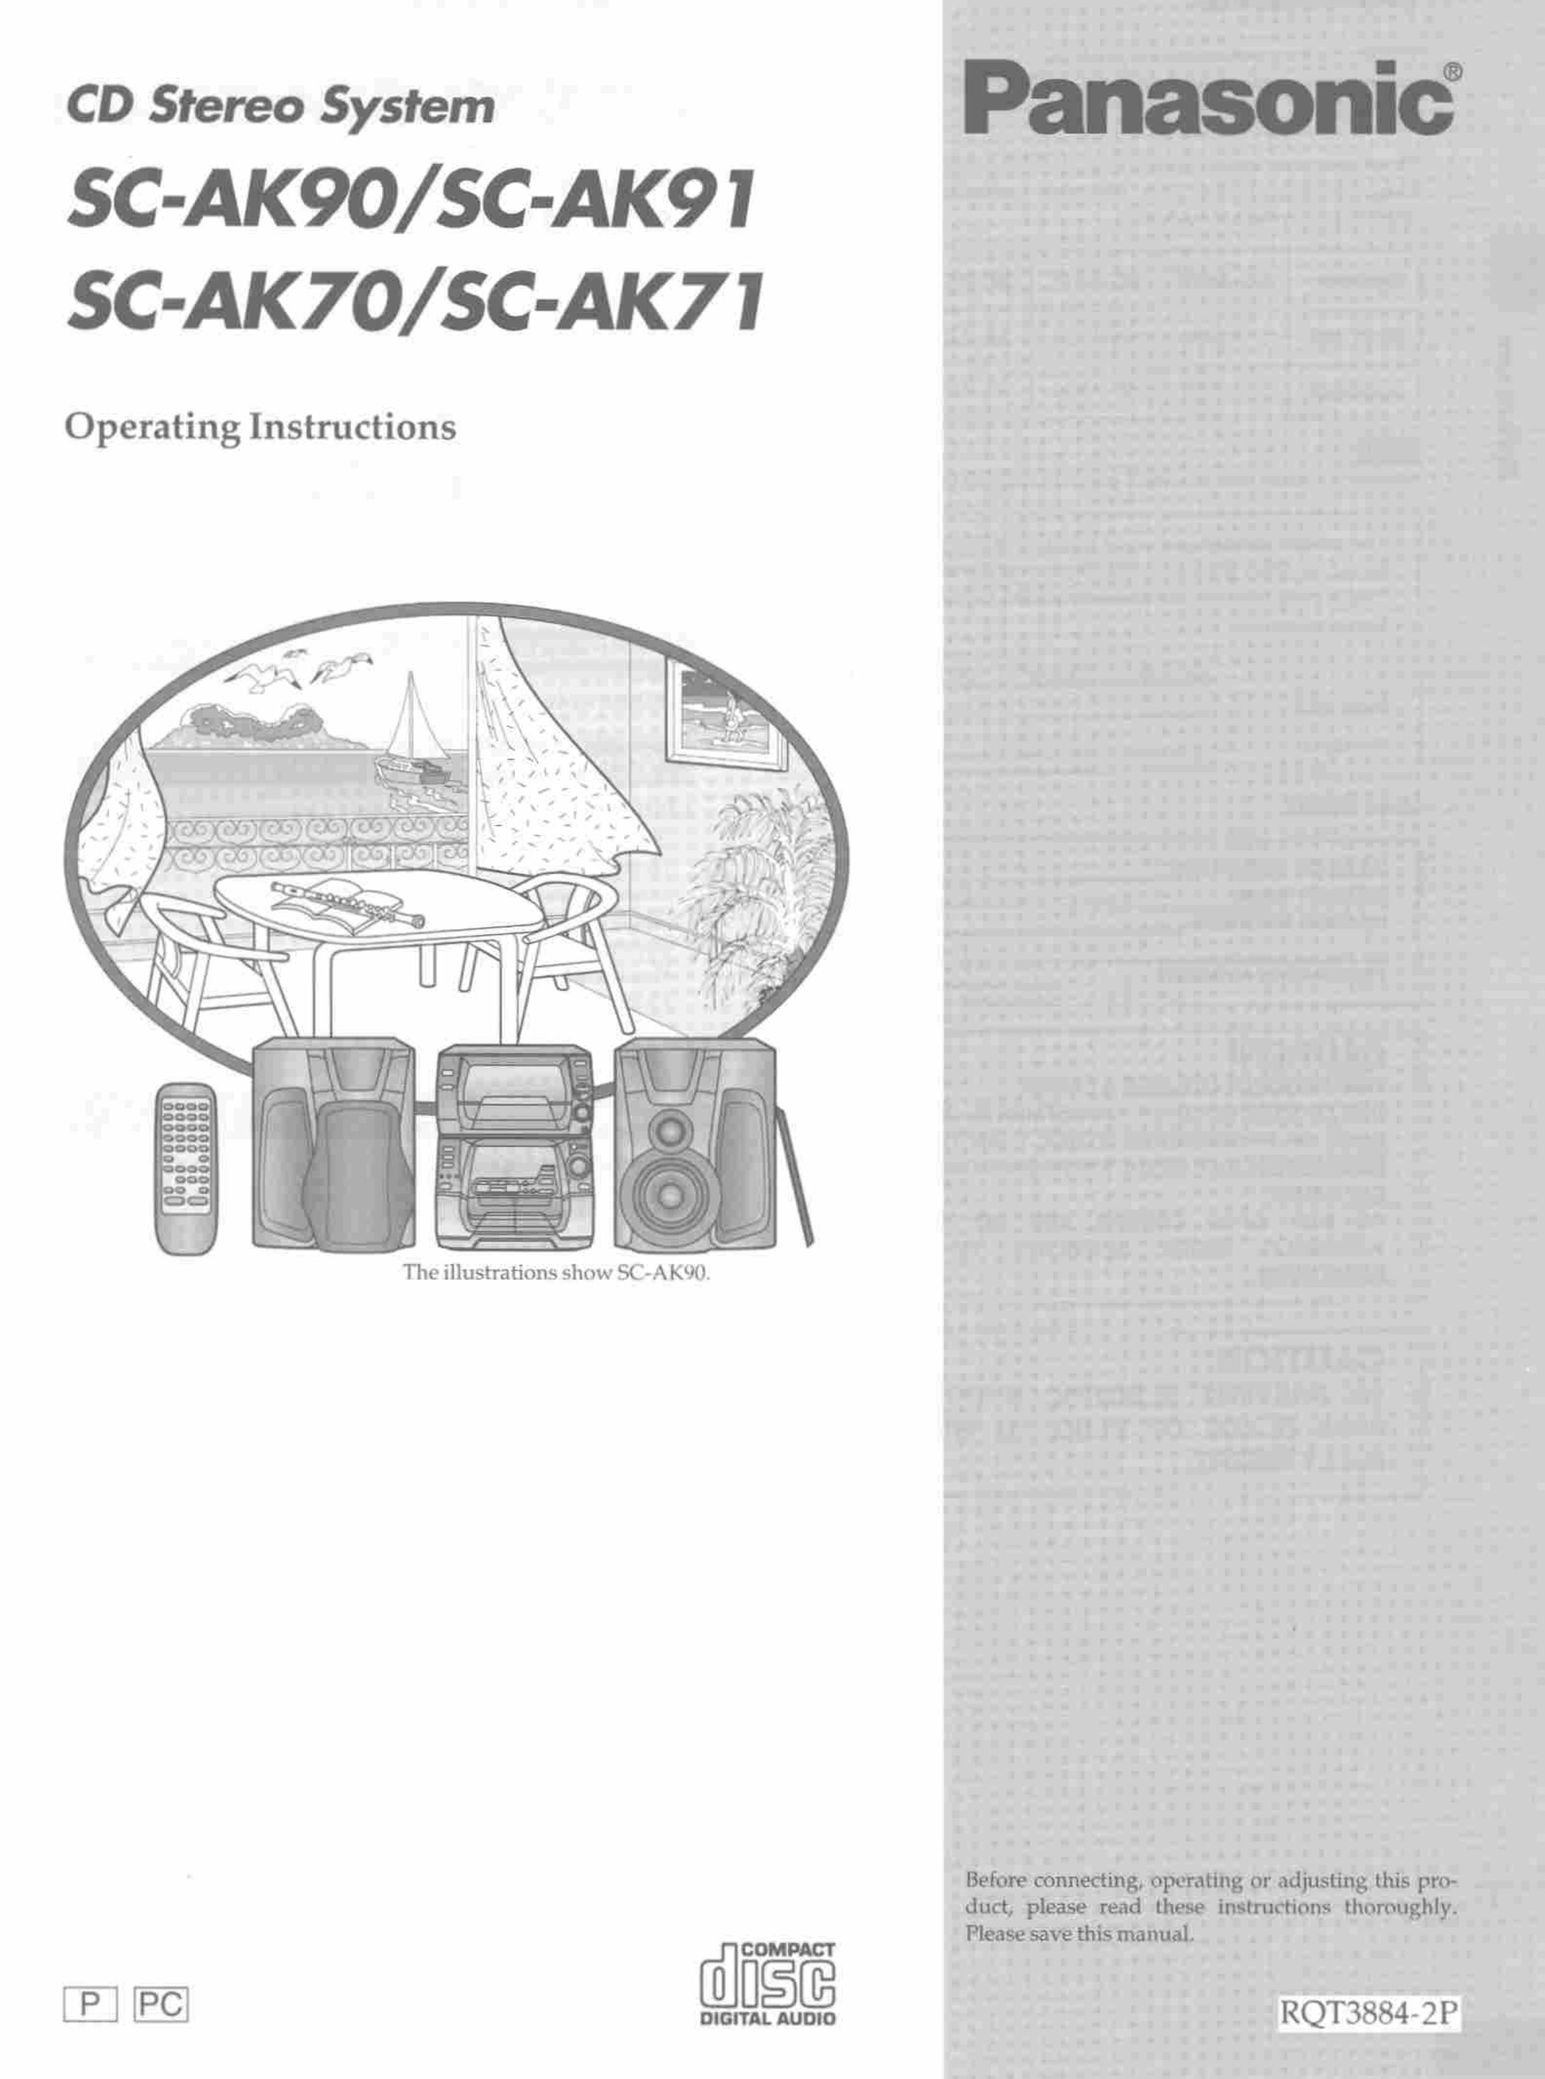 Panasonic SCAK71 Speaker User Manual